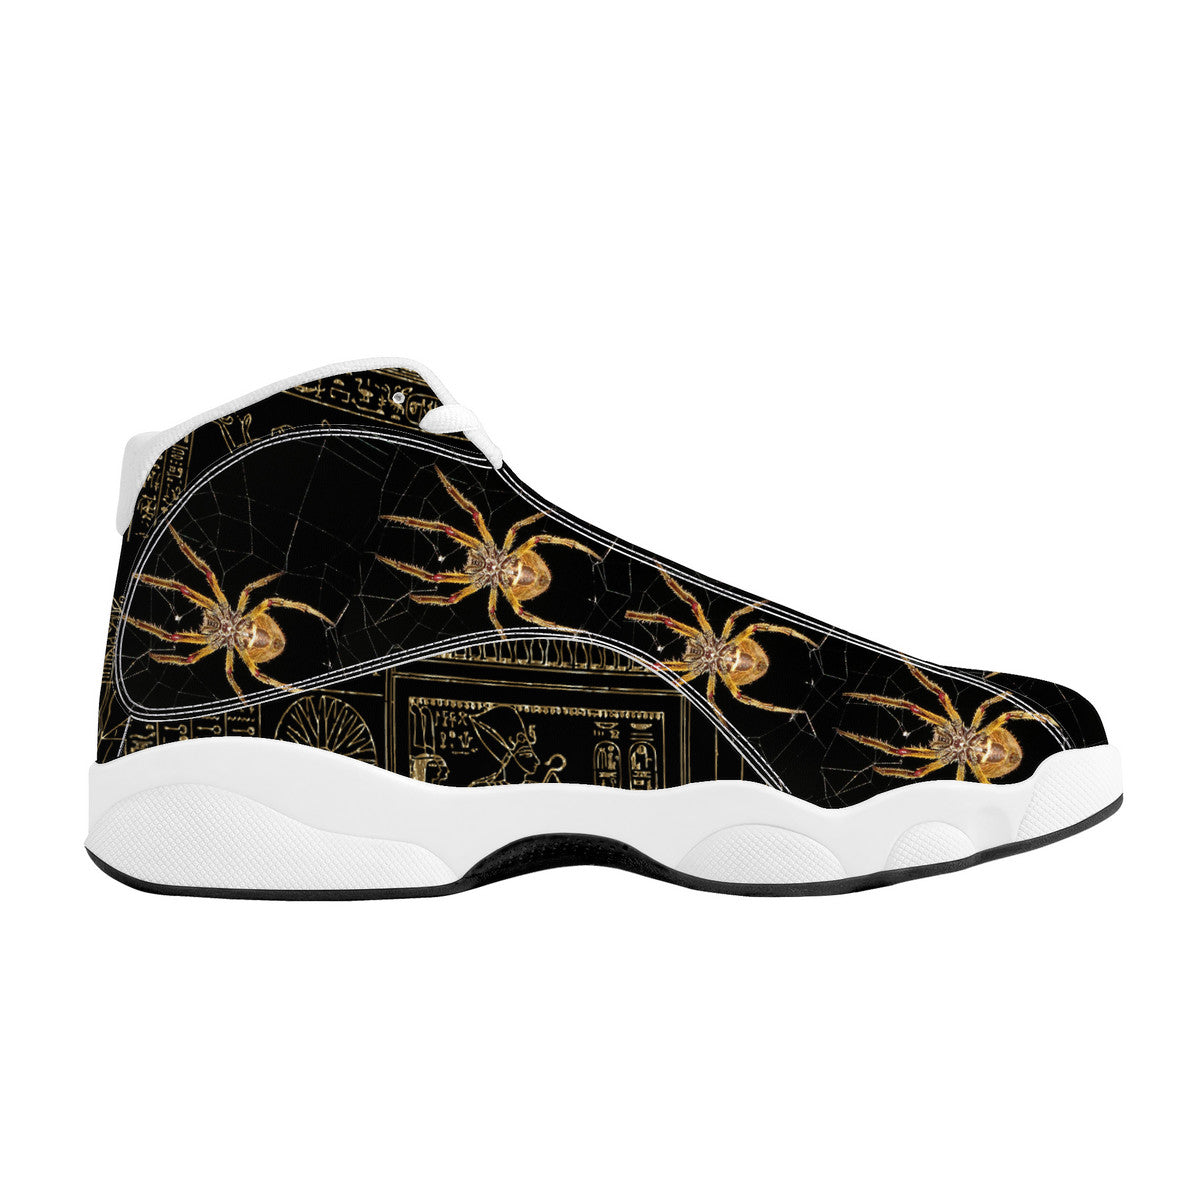 Gold Spider | Basketball Shoes Customized | Shoe Zero